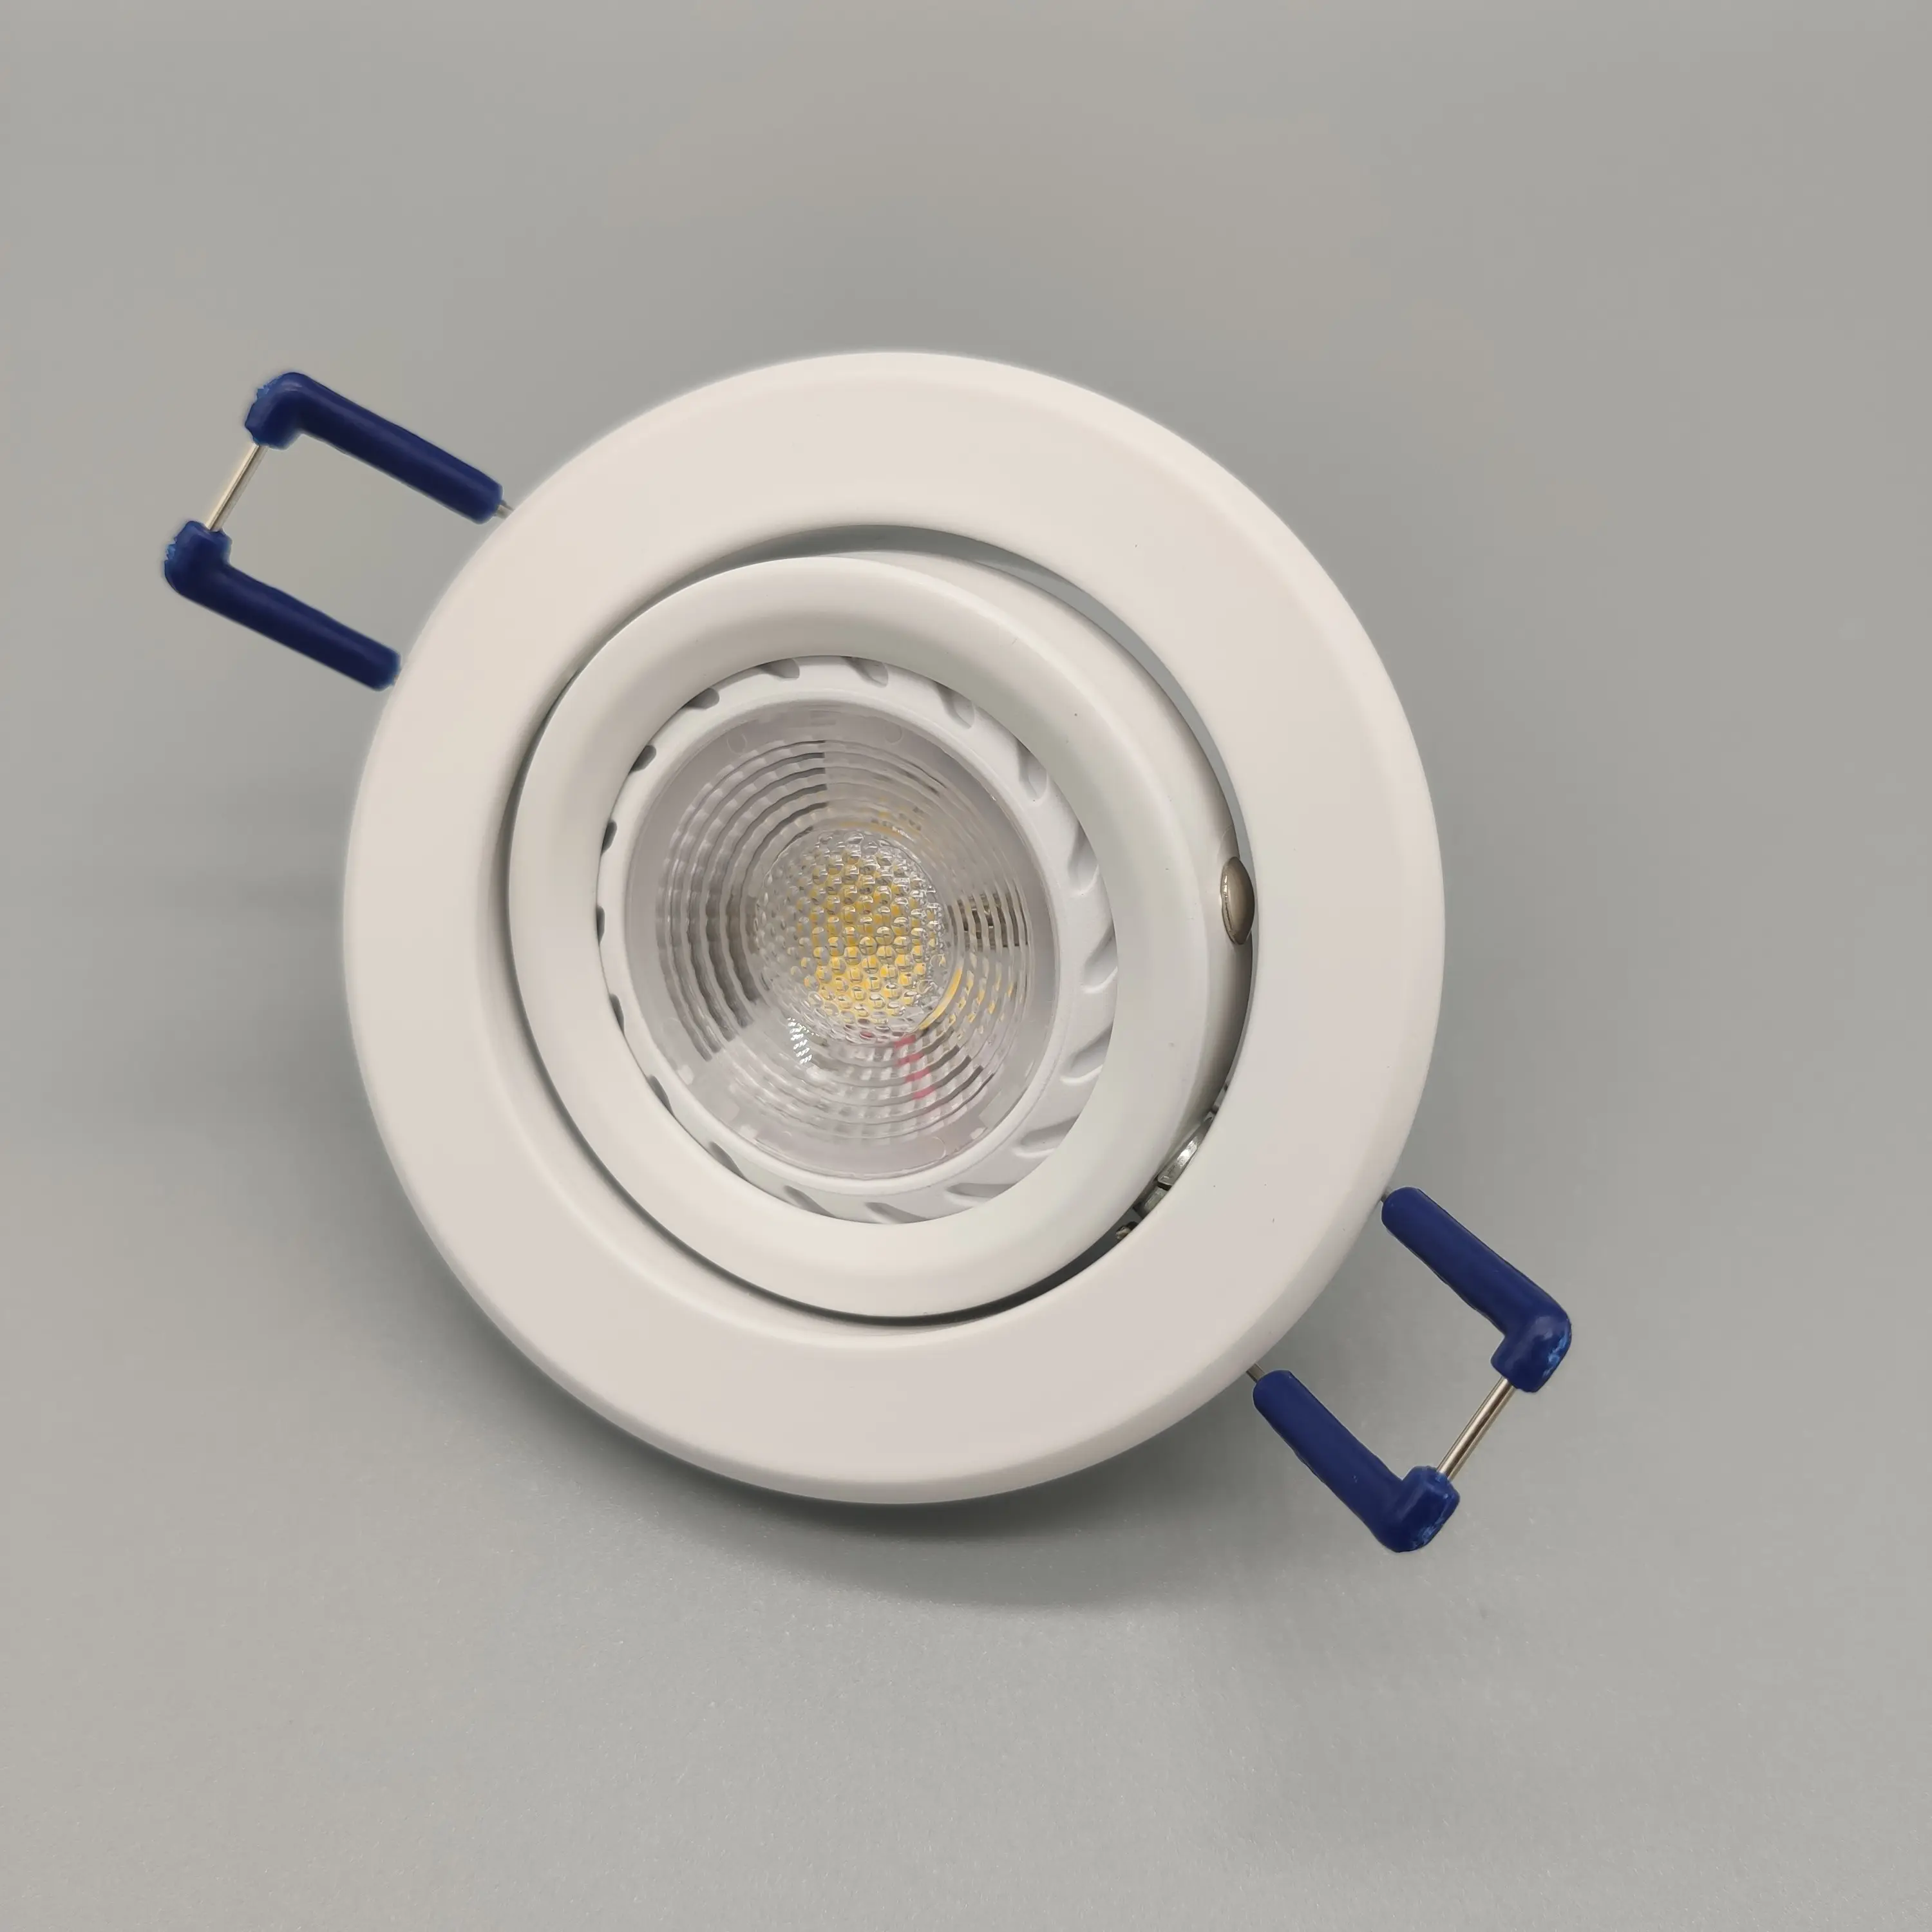 L'ÉPI LED MR16 Downlight Lampe 5 W MR16 Module 220 V